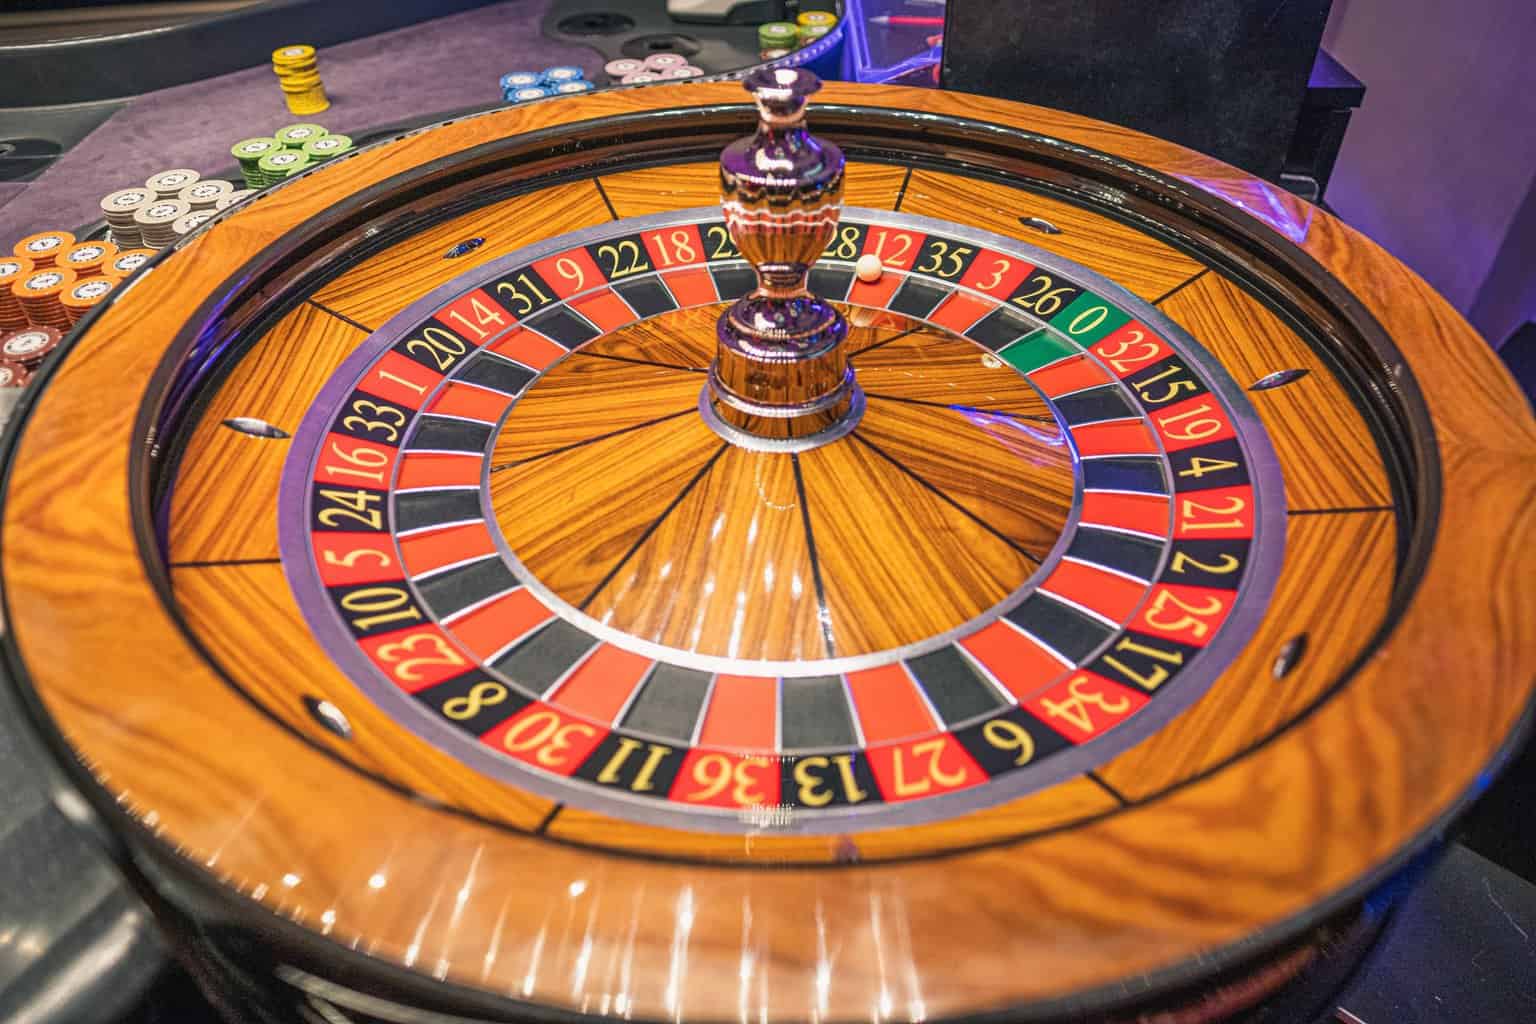 roulette, $12 million, drake, twitch, igaming, gambling, marketing